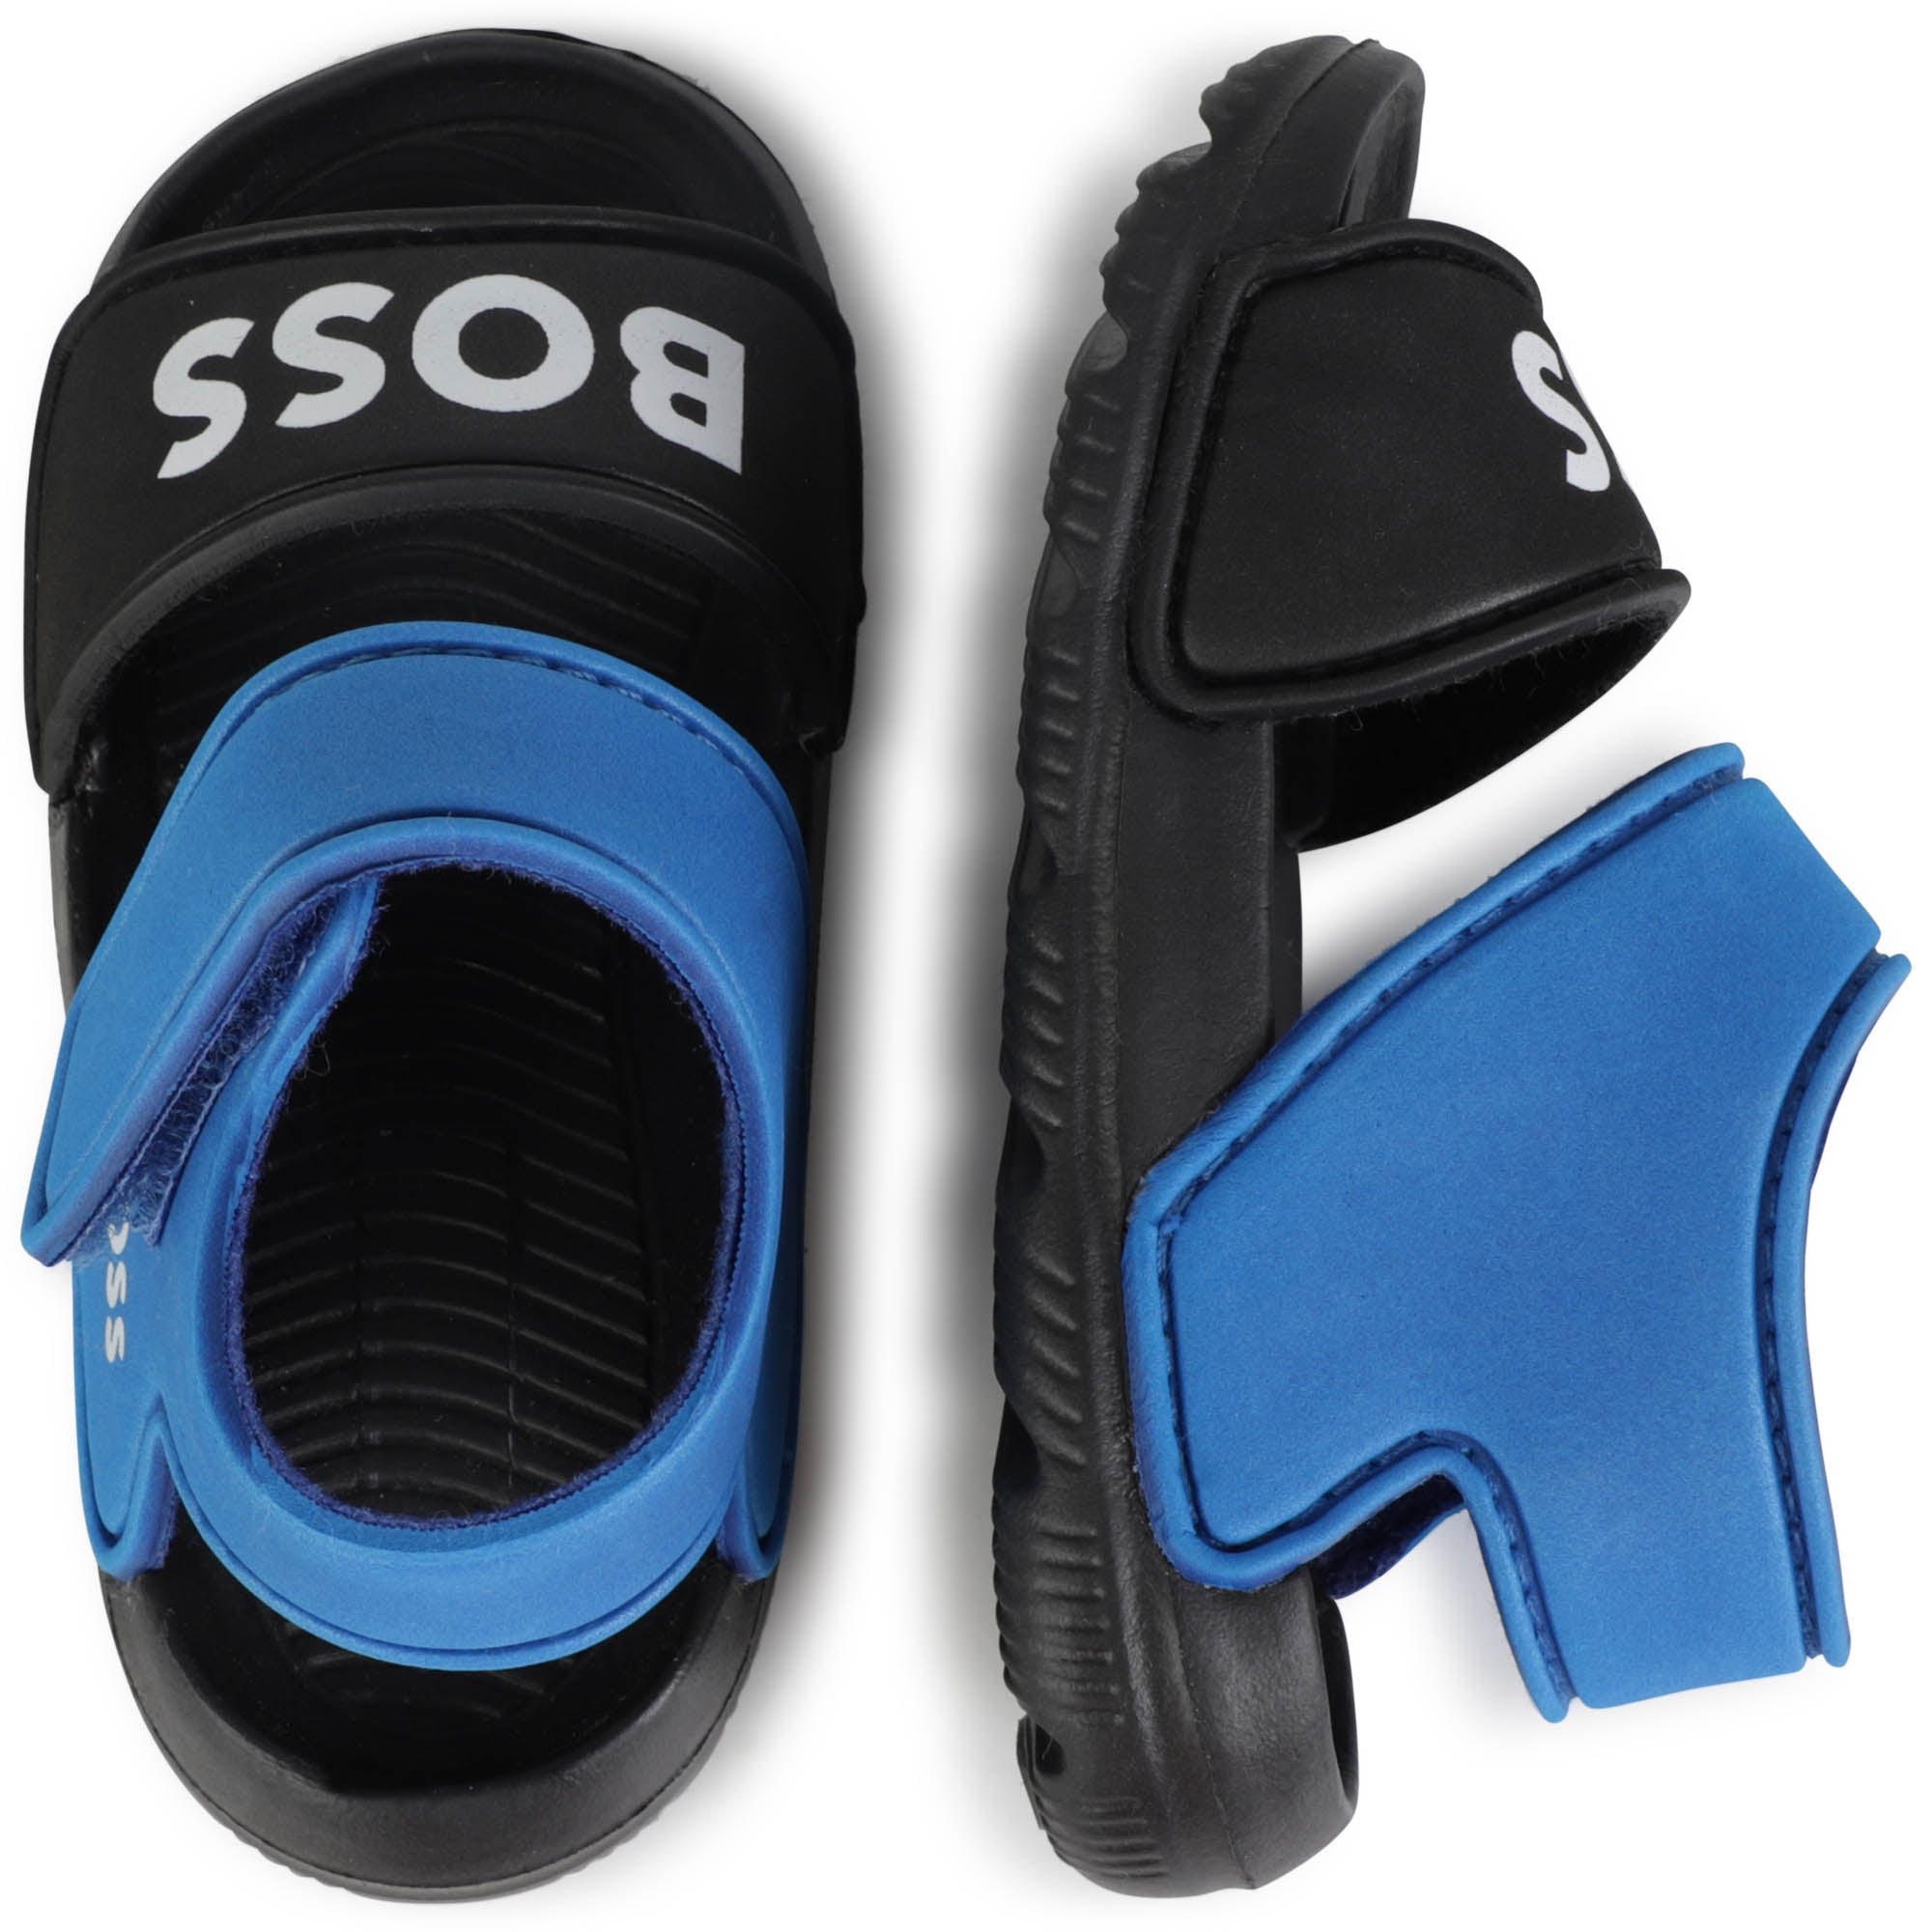 Hugo Boss Baby Boys Aqua Sandals